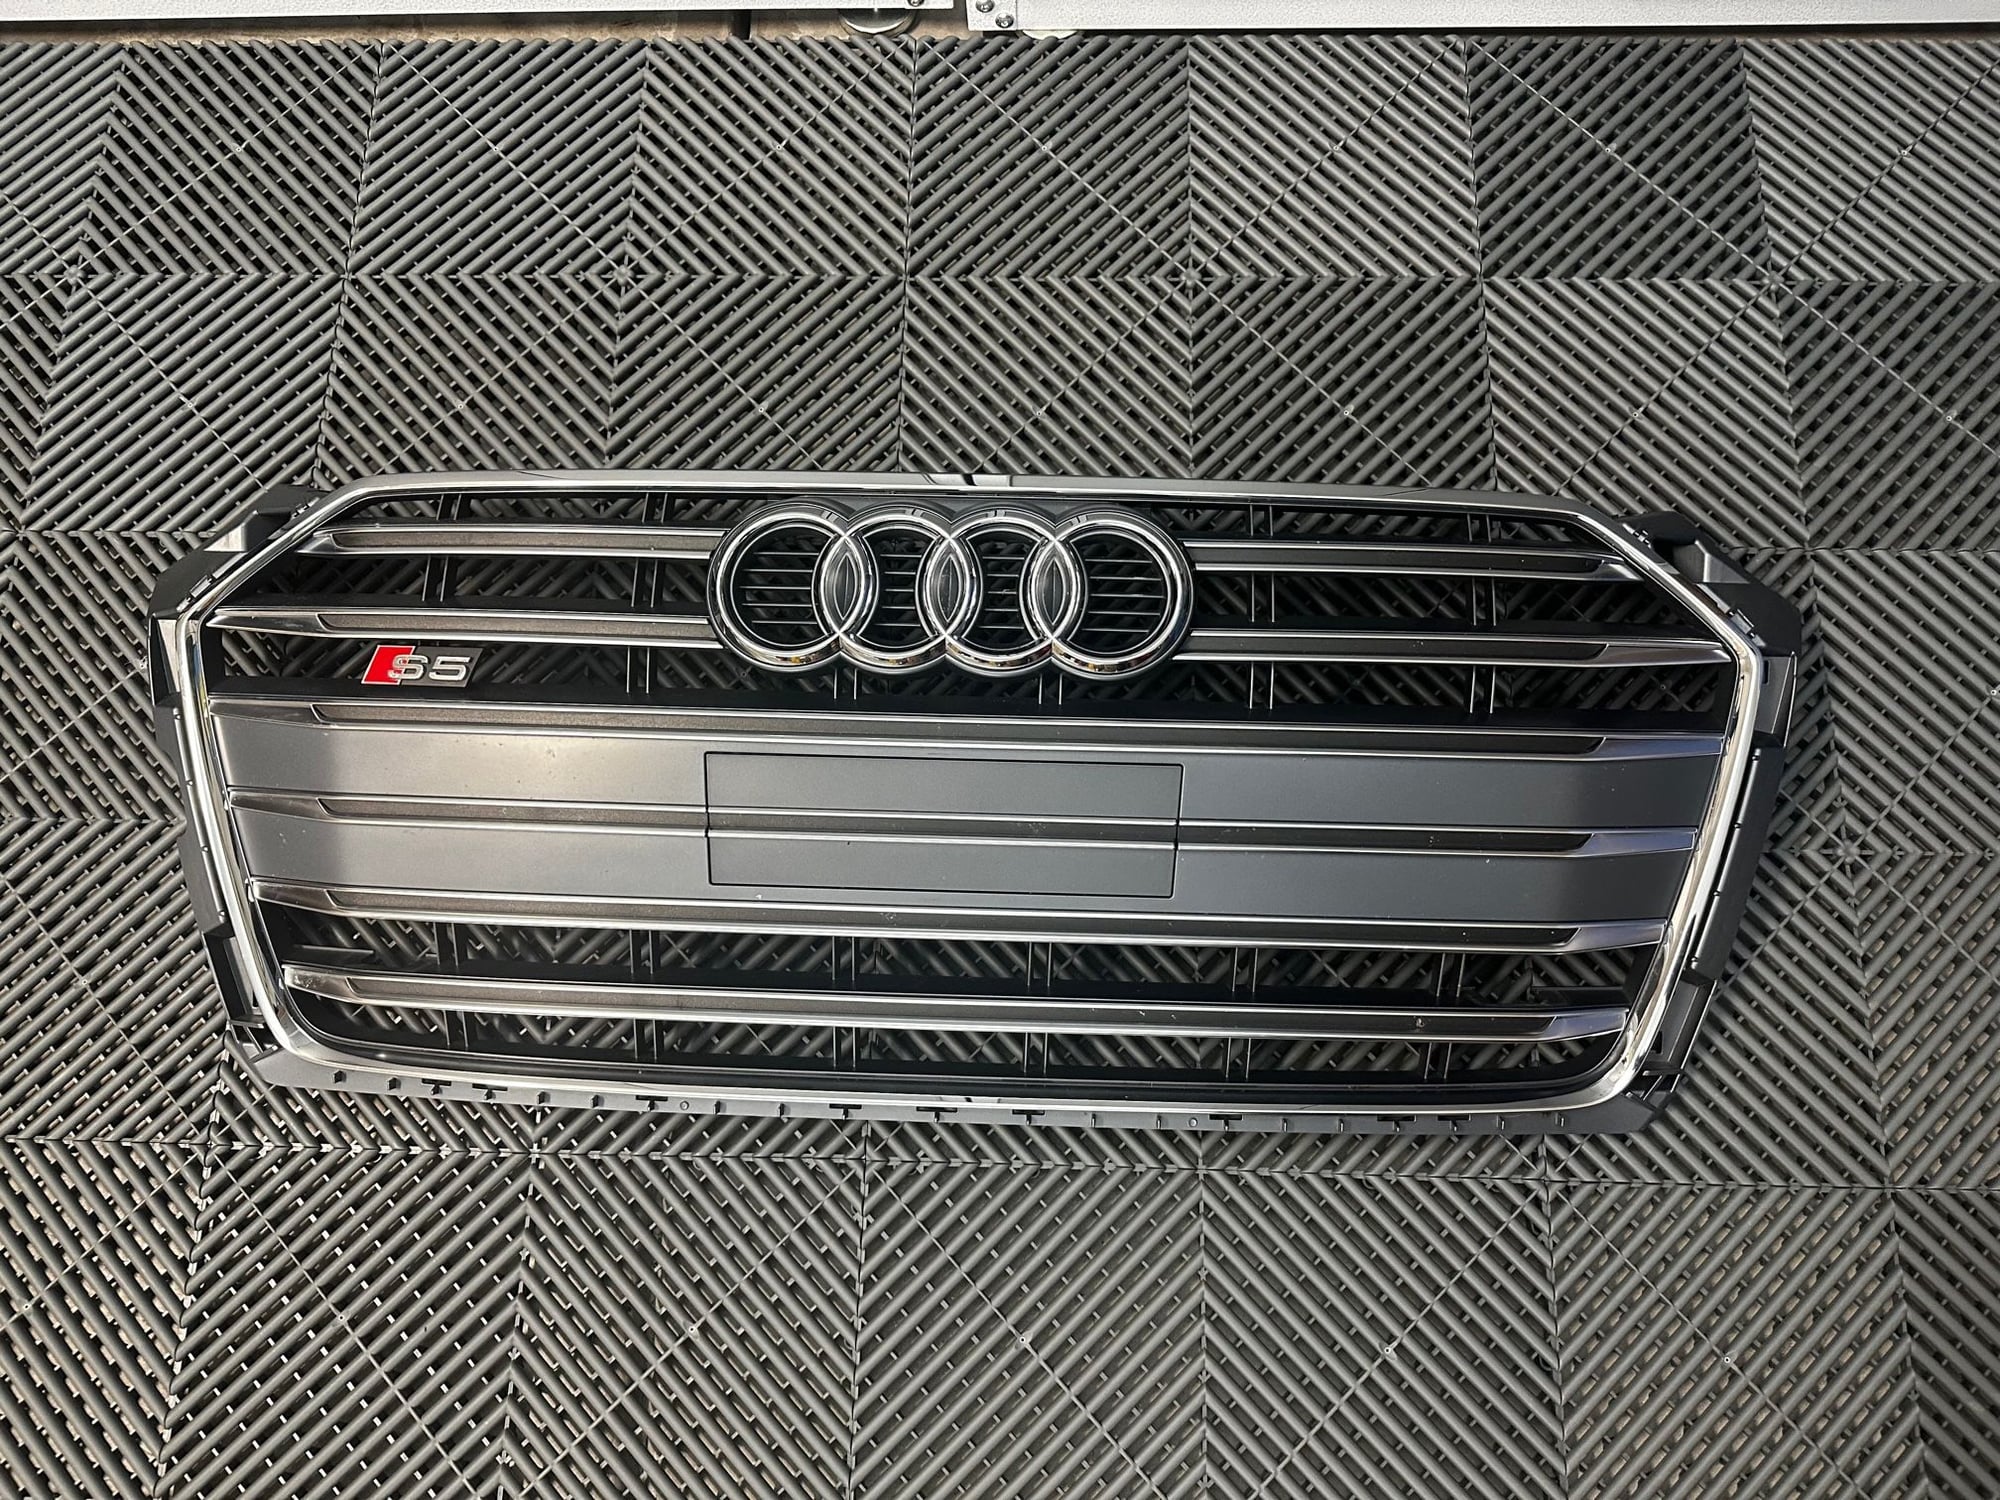 2018 Audi S5 Sportback - Audi B9 S5 Sportback parts - San Jose, CA 95122, United States